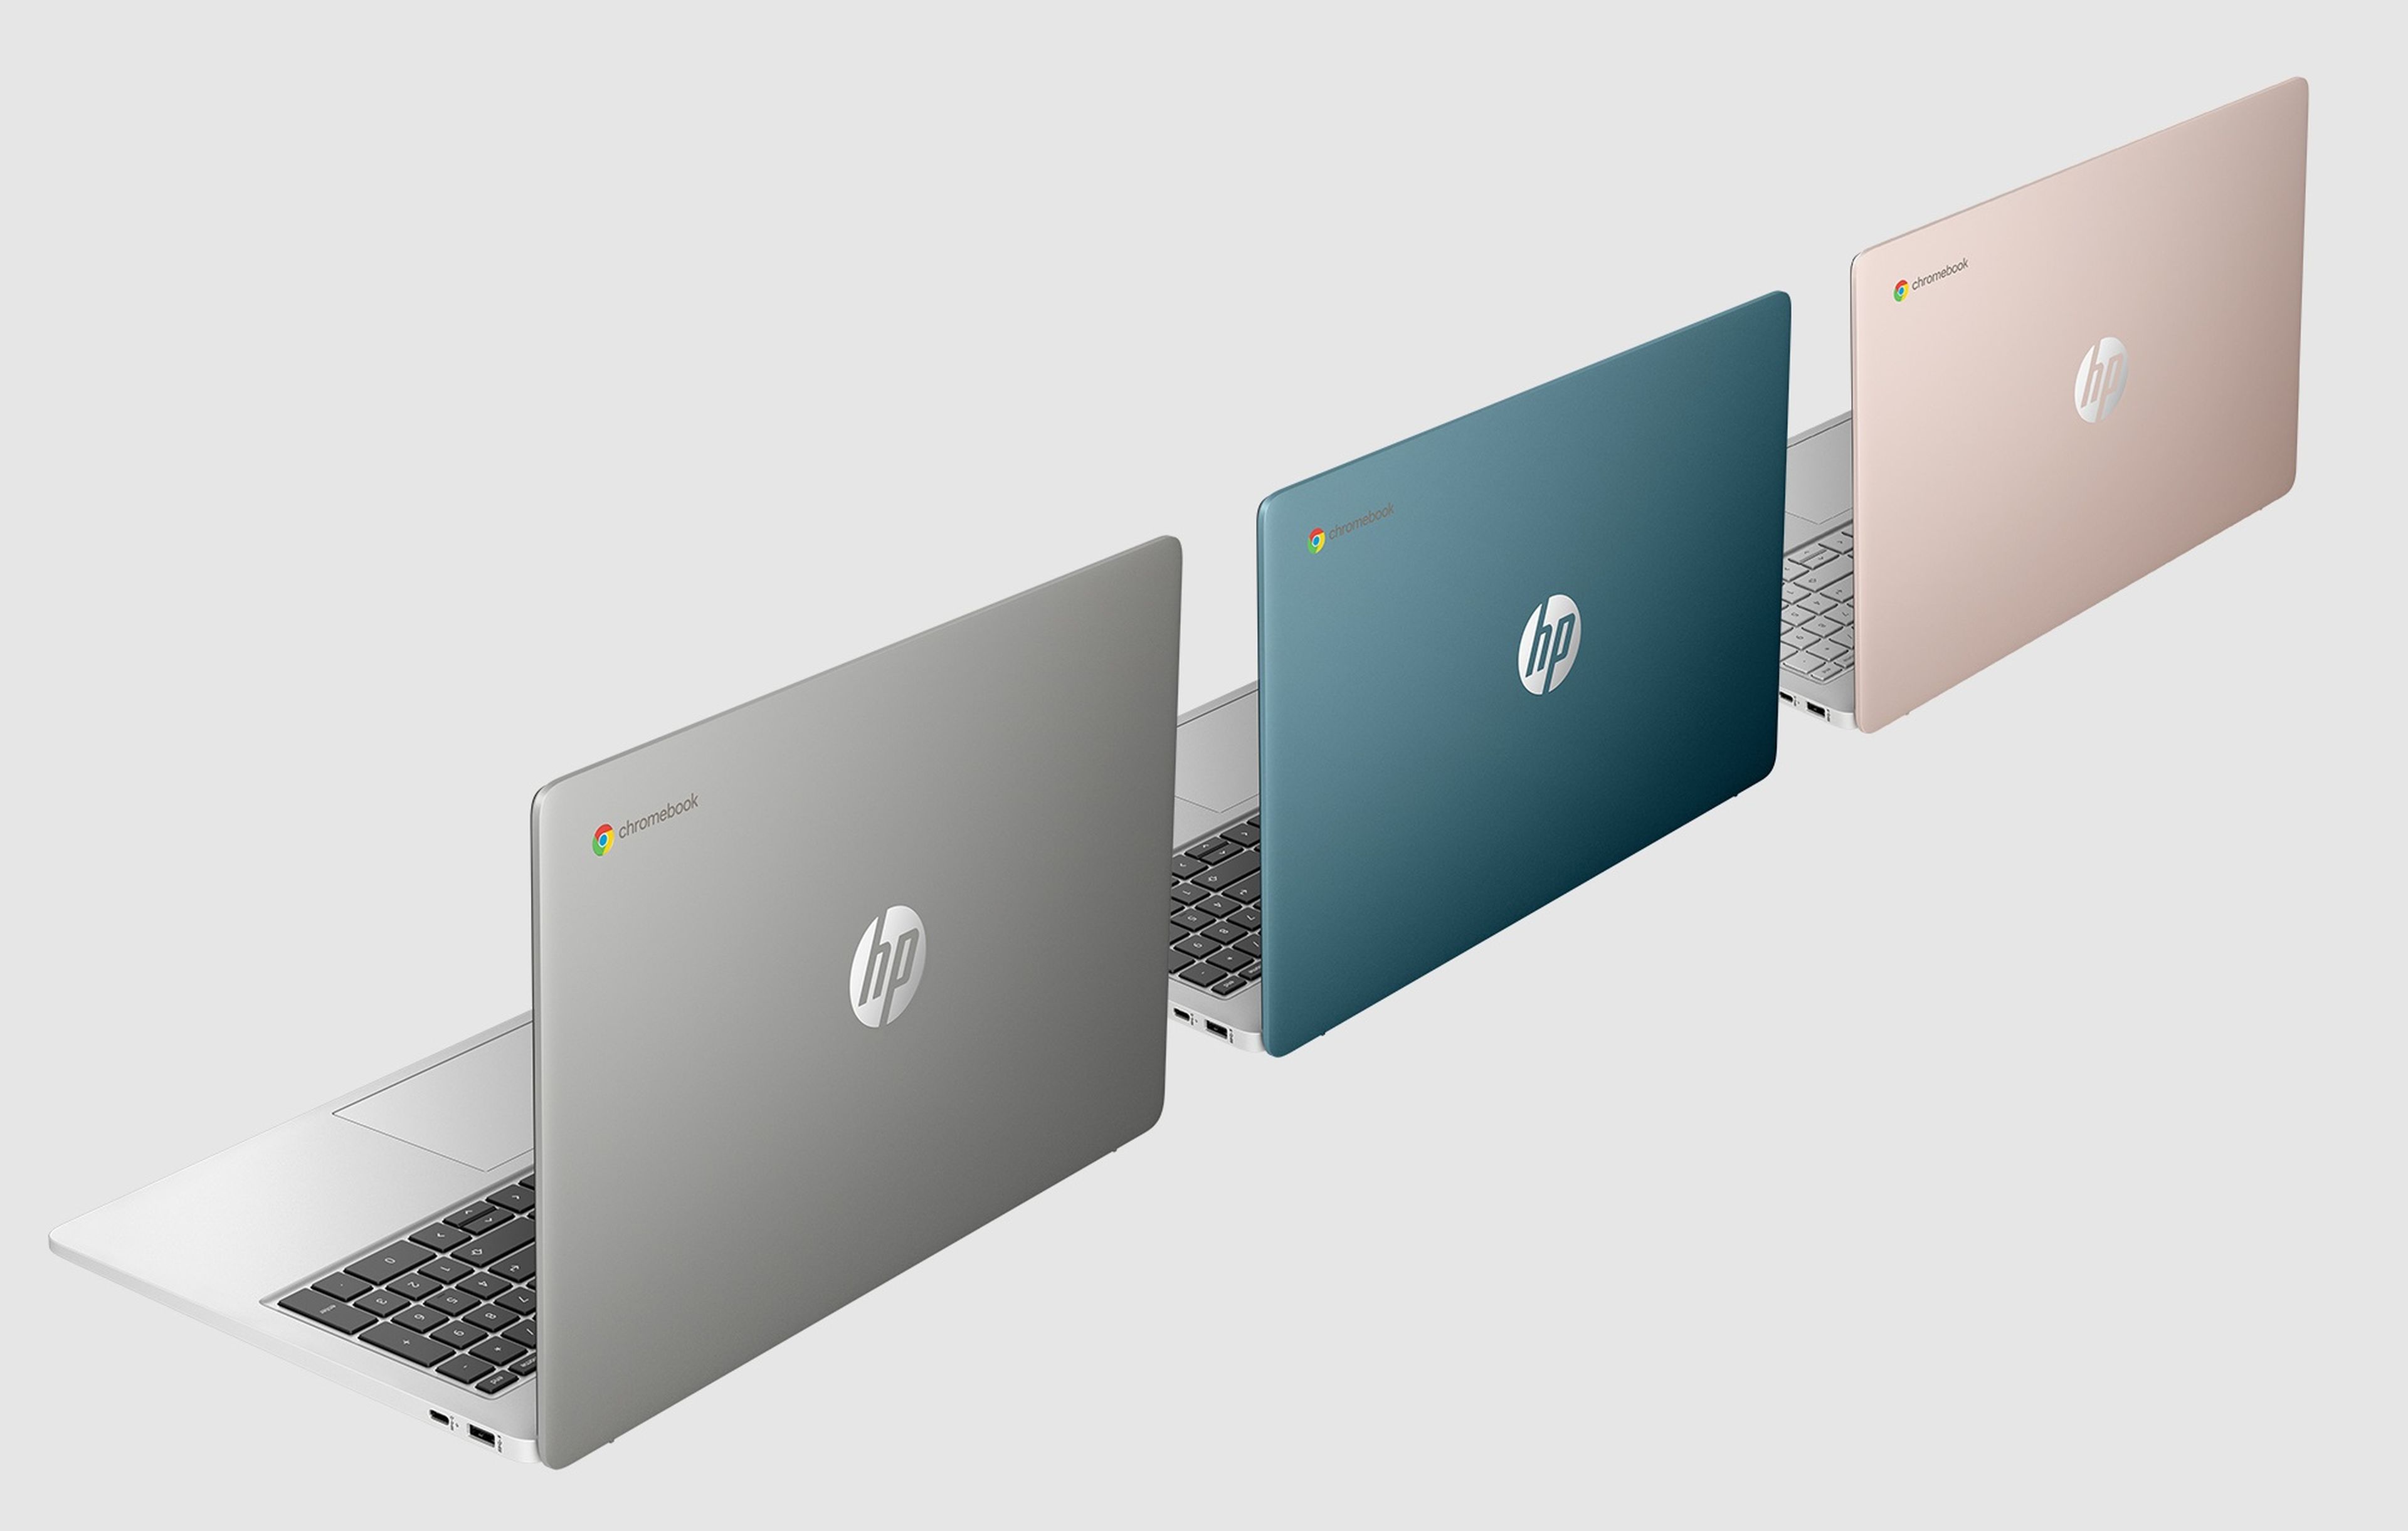 HP Chromebook de 15,6